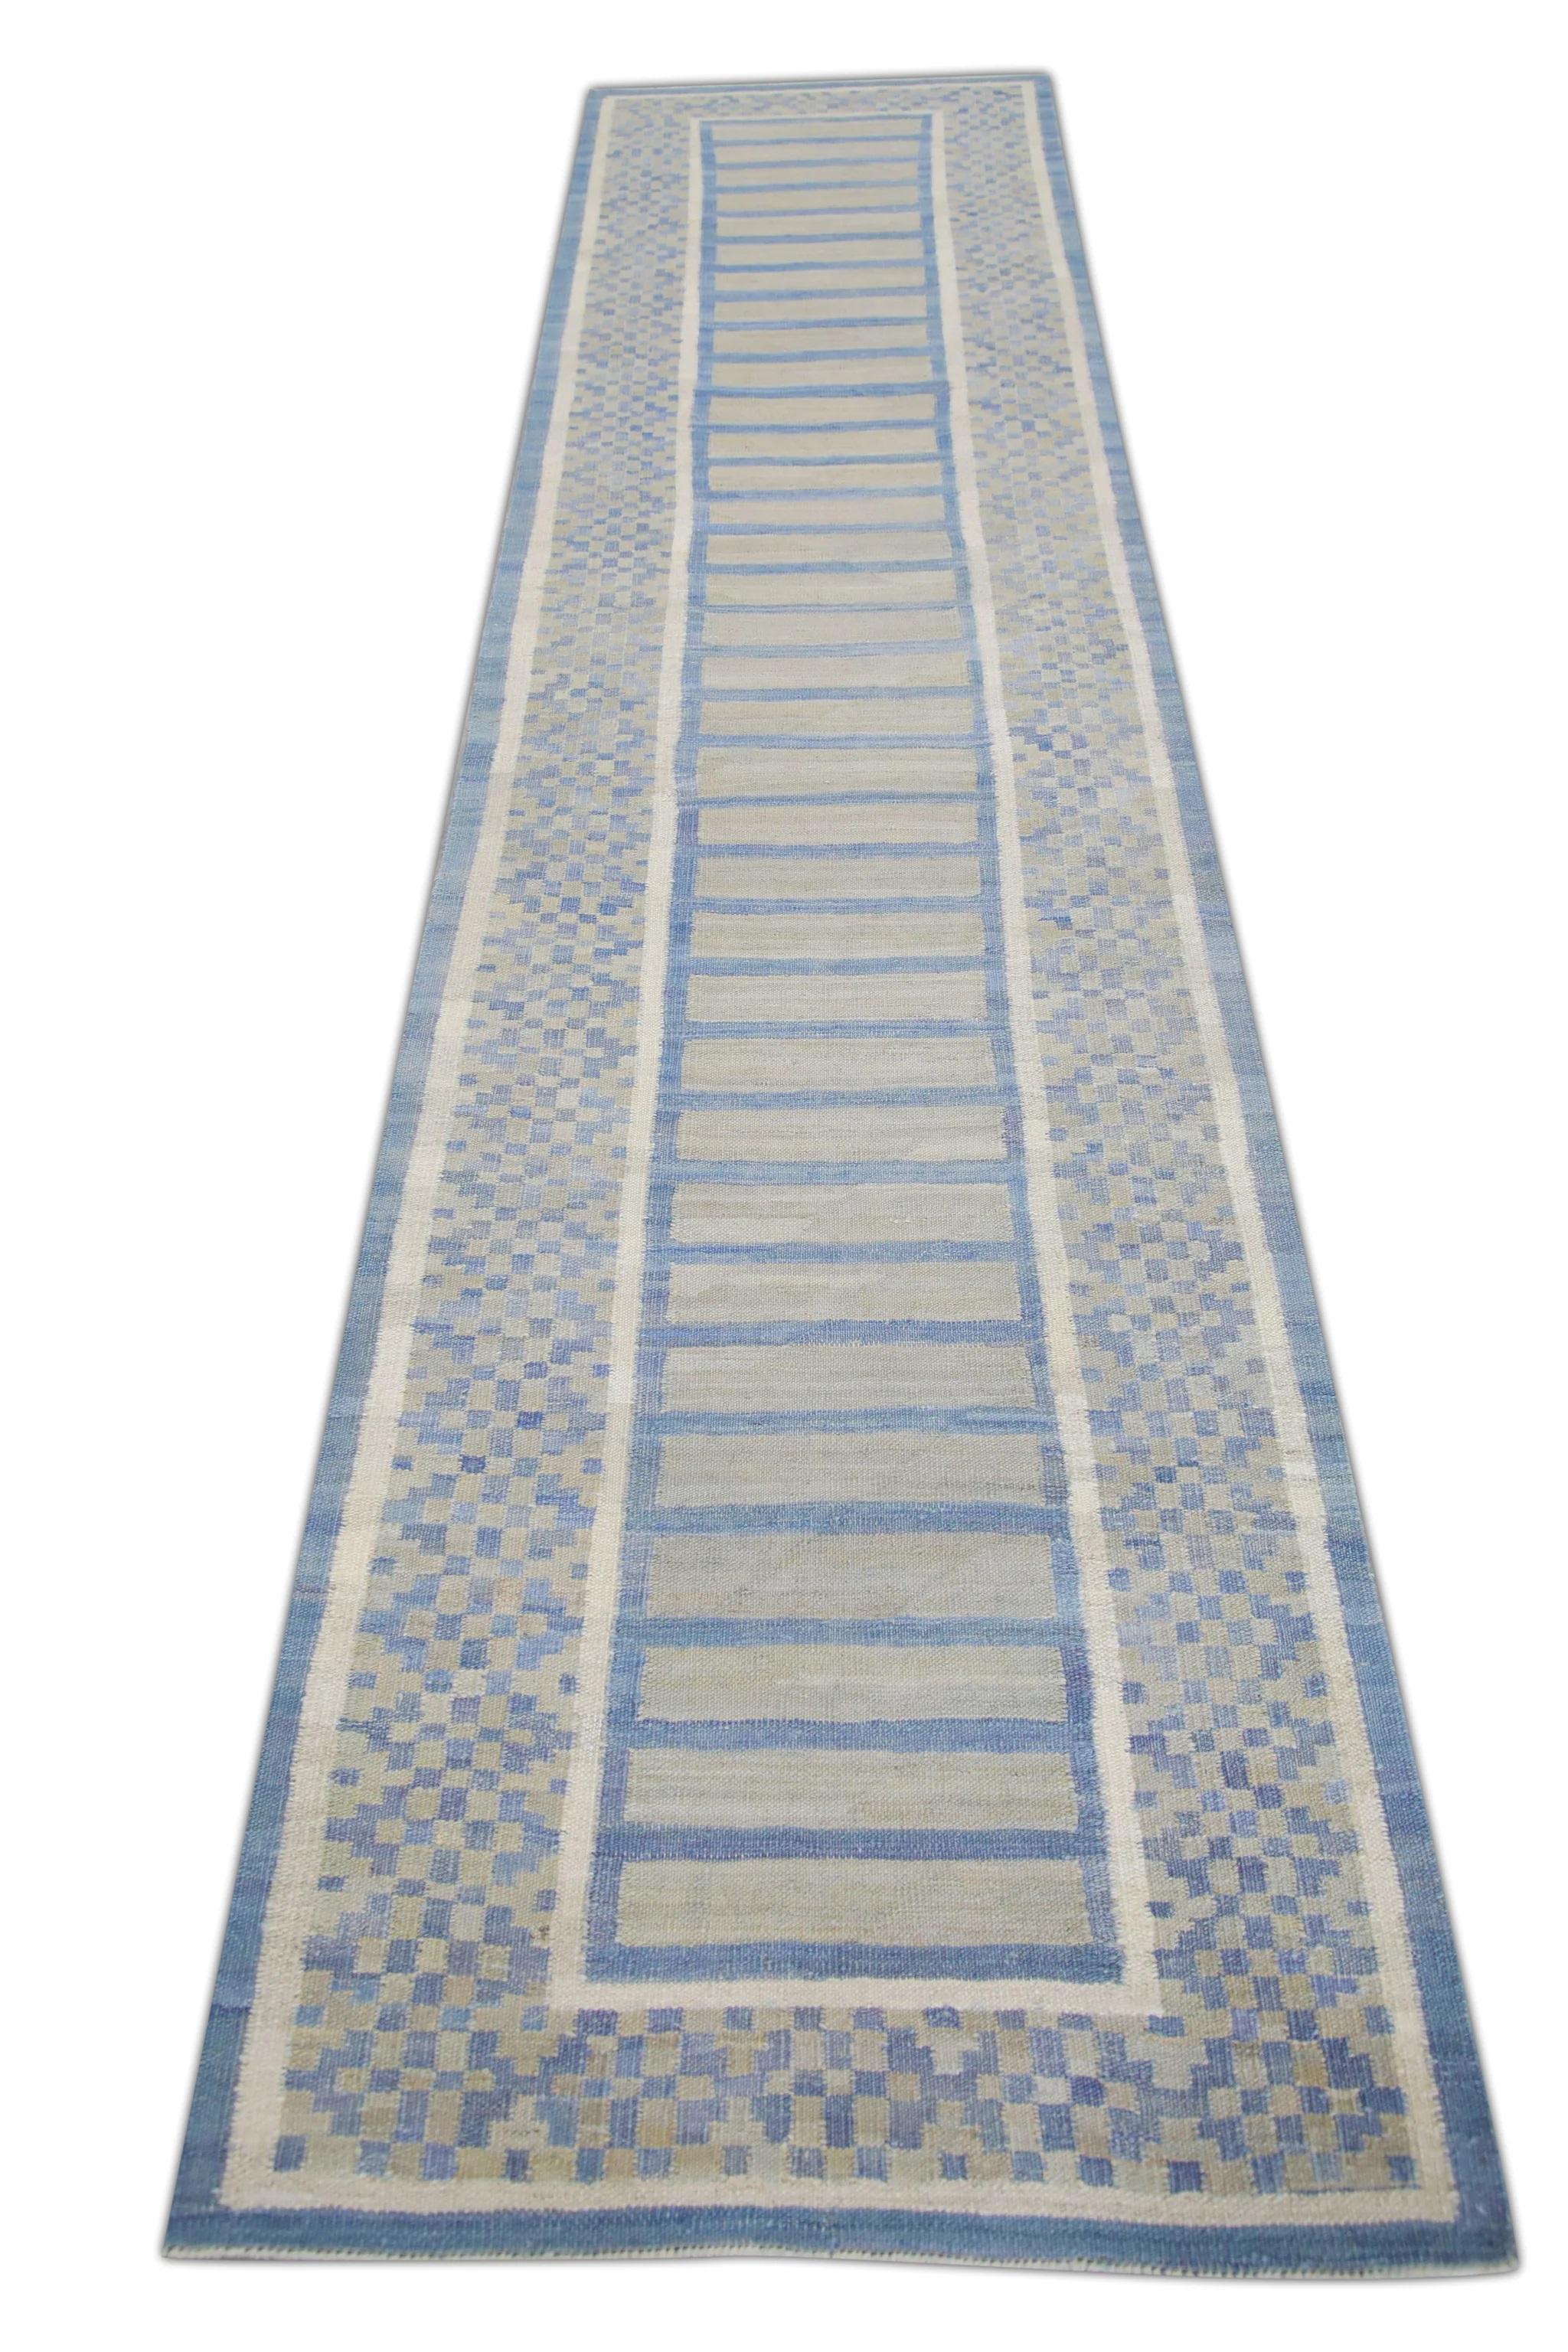 Contemporary Gray and Blue Geometric Pattern Flatweave Handmade Wool Rug 2'11